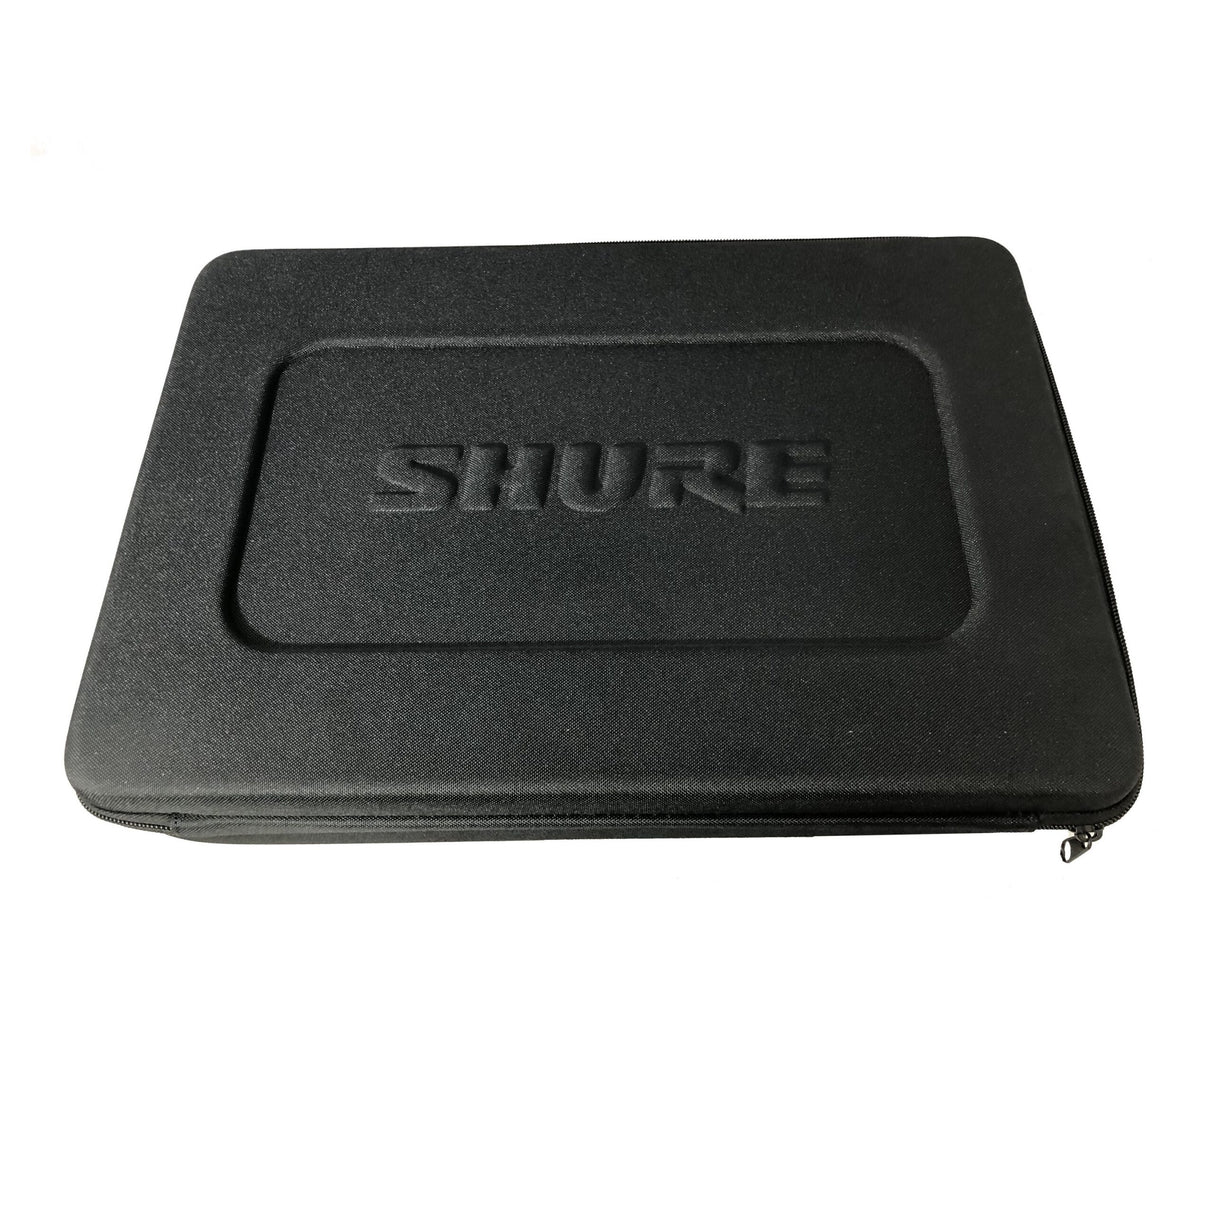 Shure 95A16526 Carrying Case for PGX, PGX-D